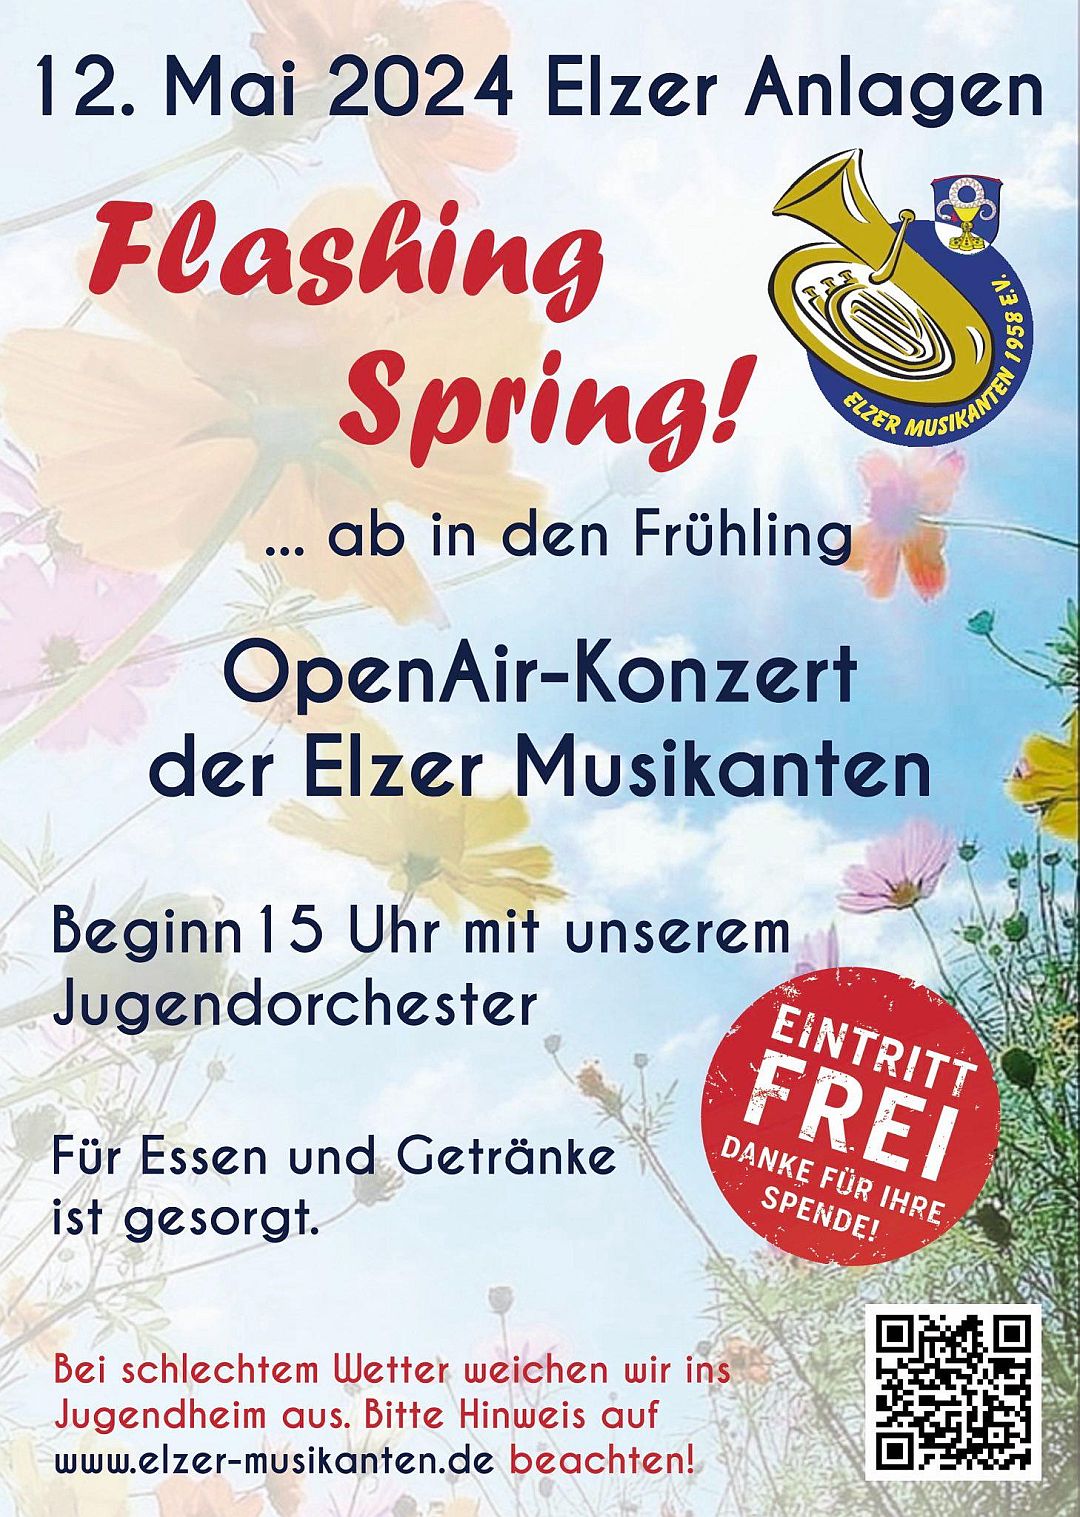 OpenAir-Konzert "Flashing Spring" am 12.05.2024